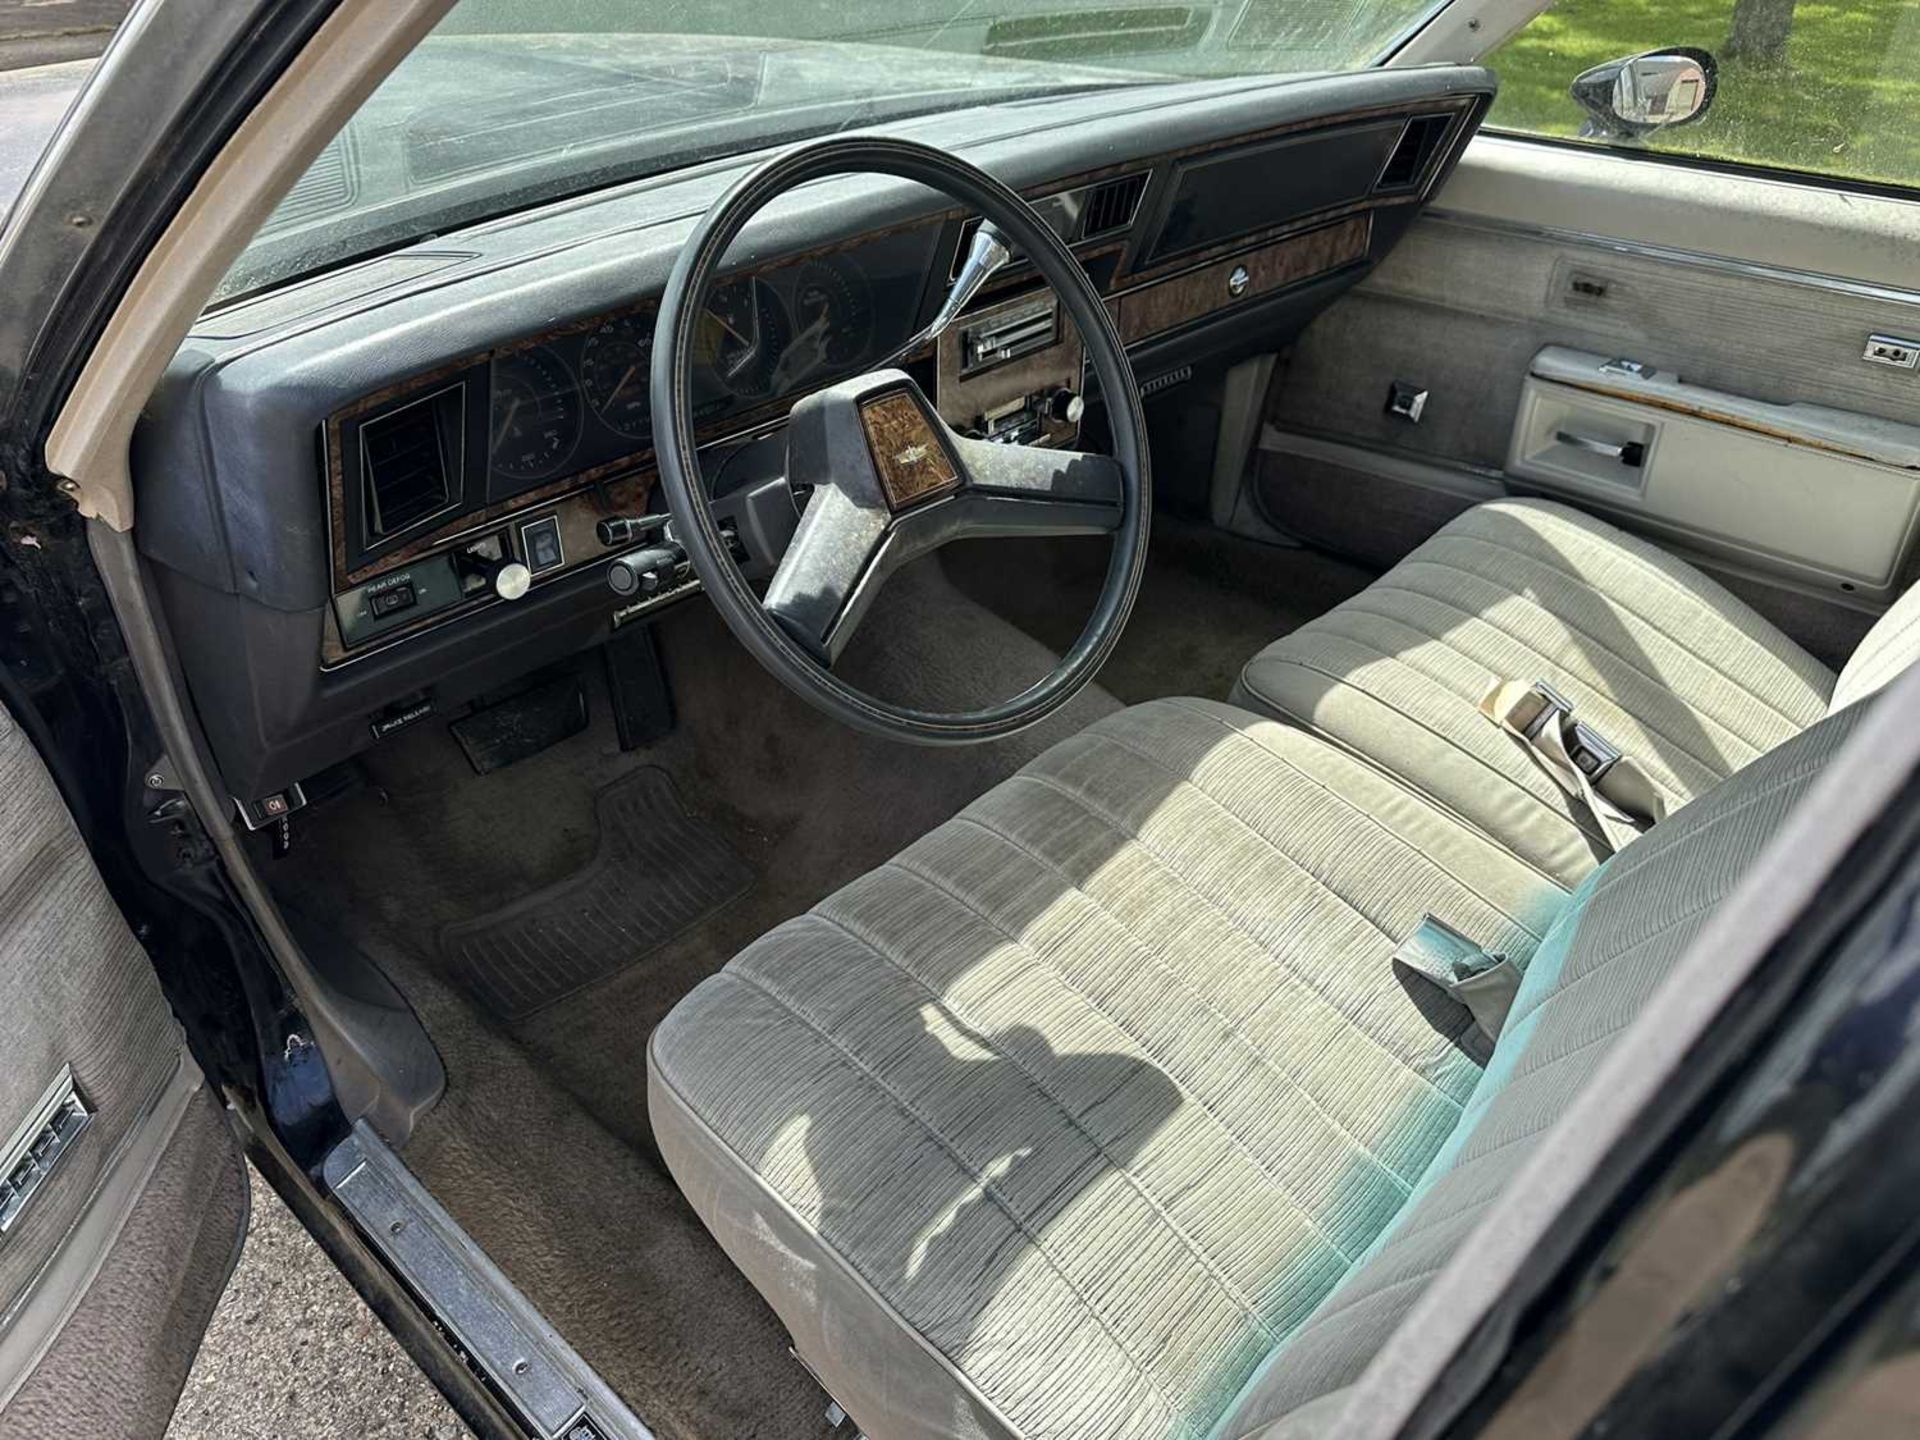 1990 Chevrolet Caprice Station Wagon, 5000cc V8, automatic, reg. no. A134 VYE - Image 13 of 14